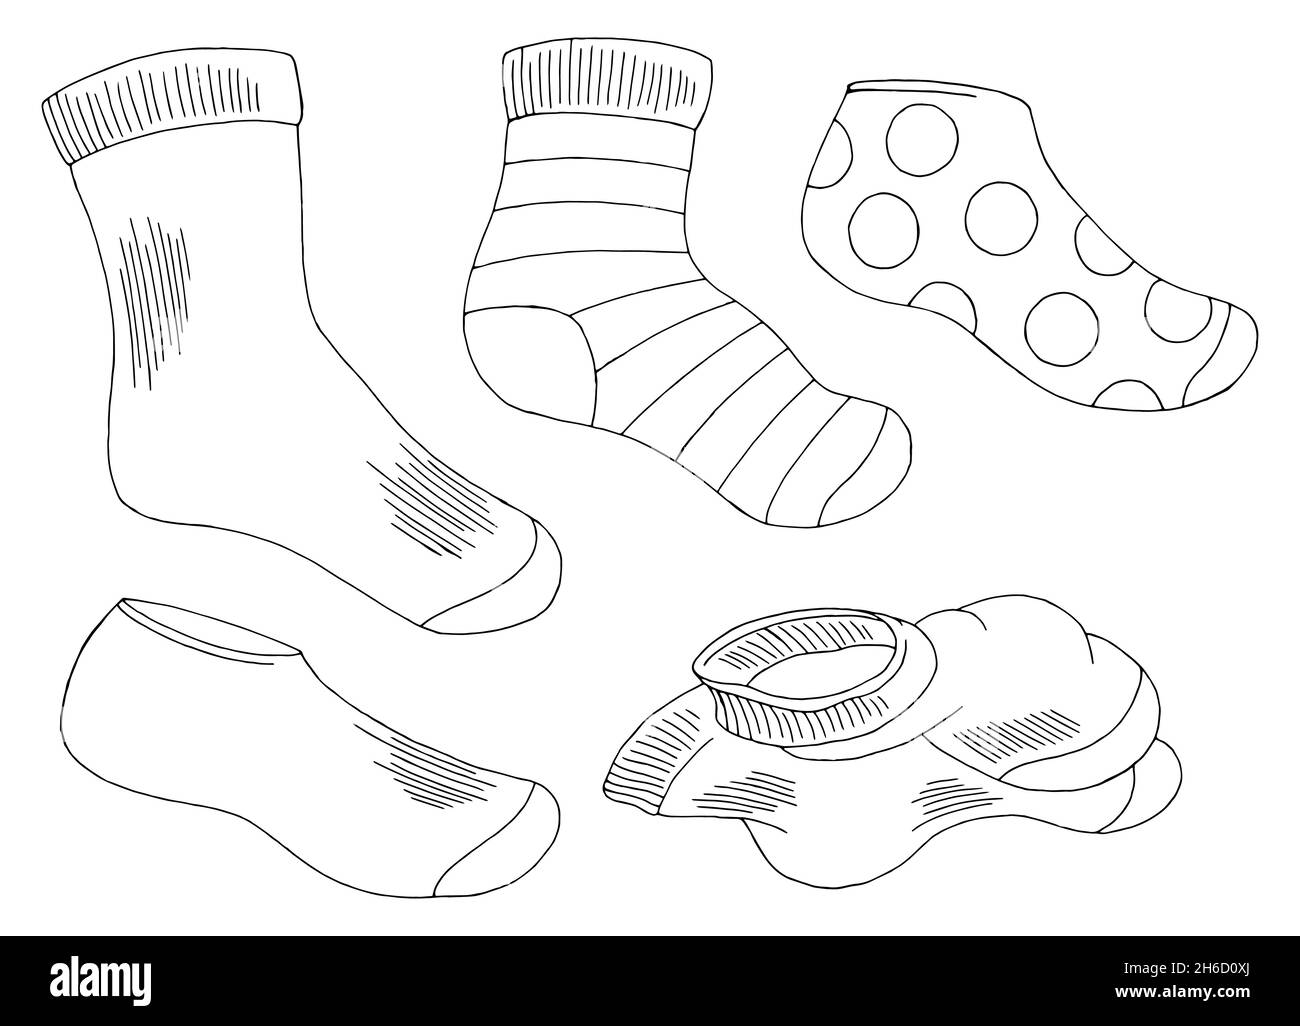 Socks set graphic black white isolated sketch illustration vector Stock Vector